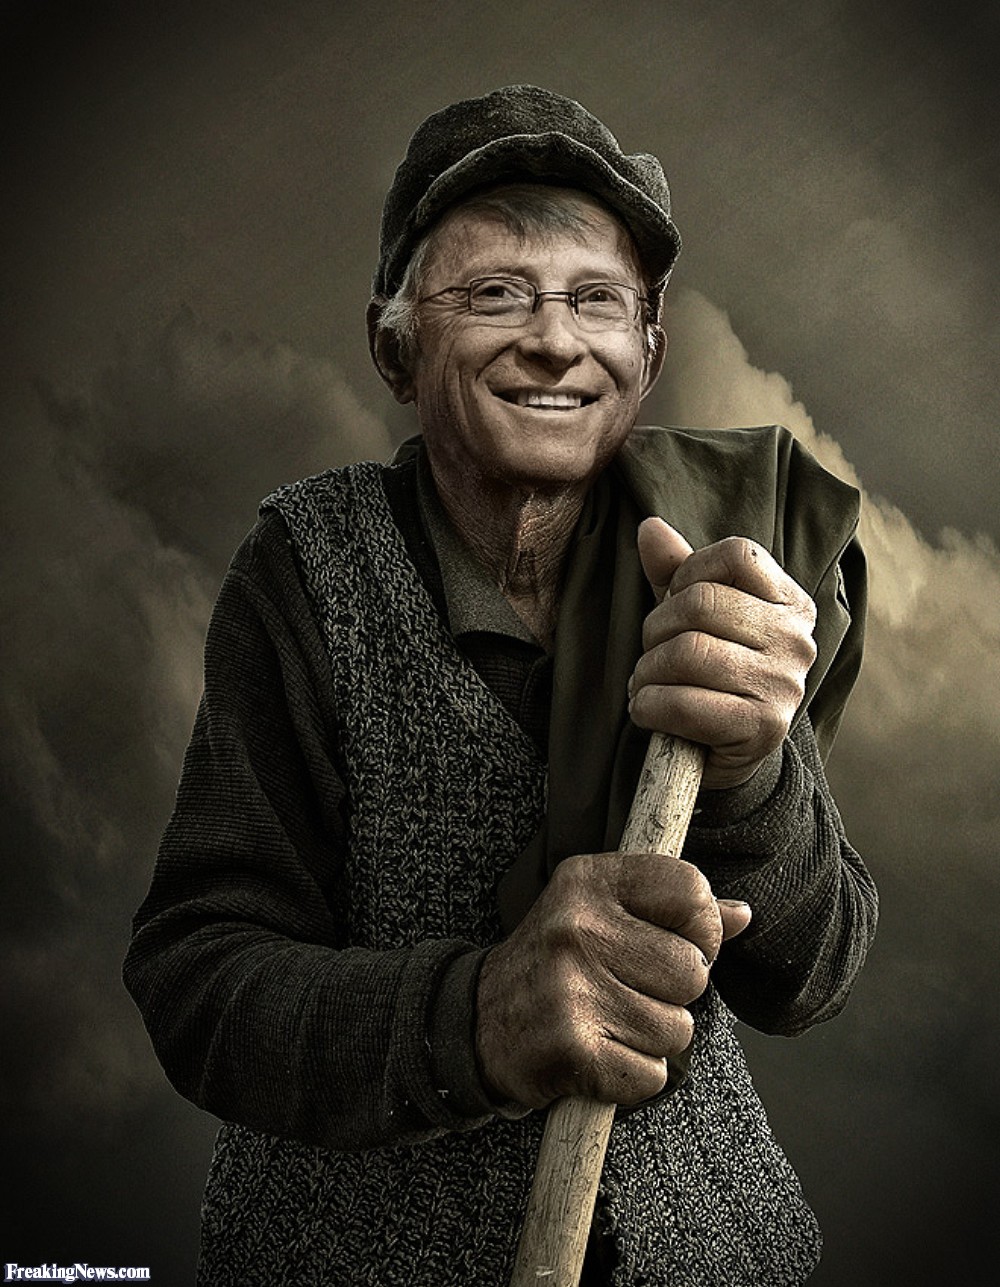 Funny Farmer Bill Gates Photoshopped Image